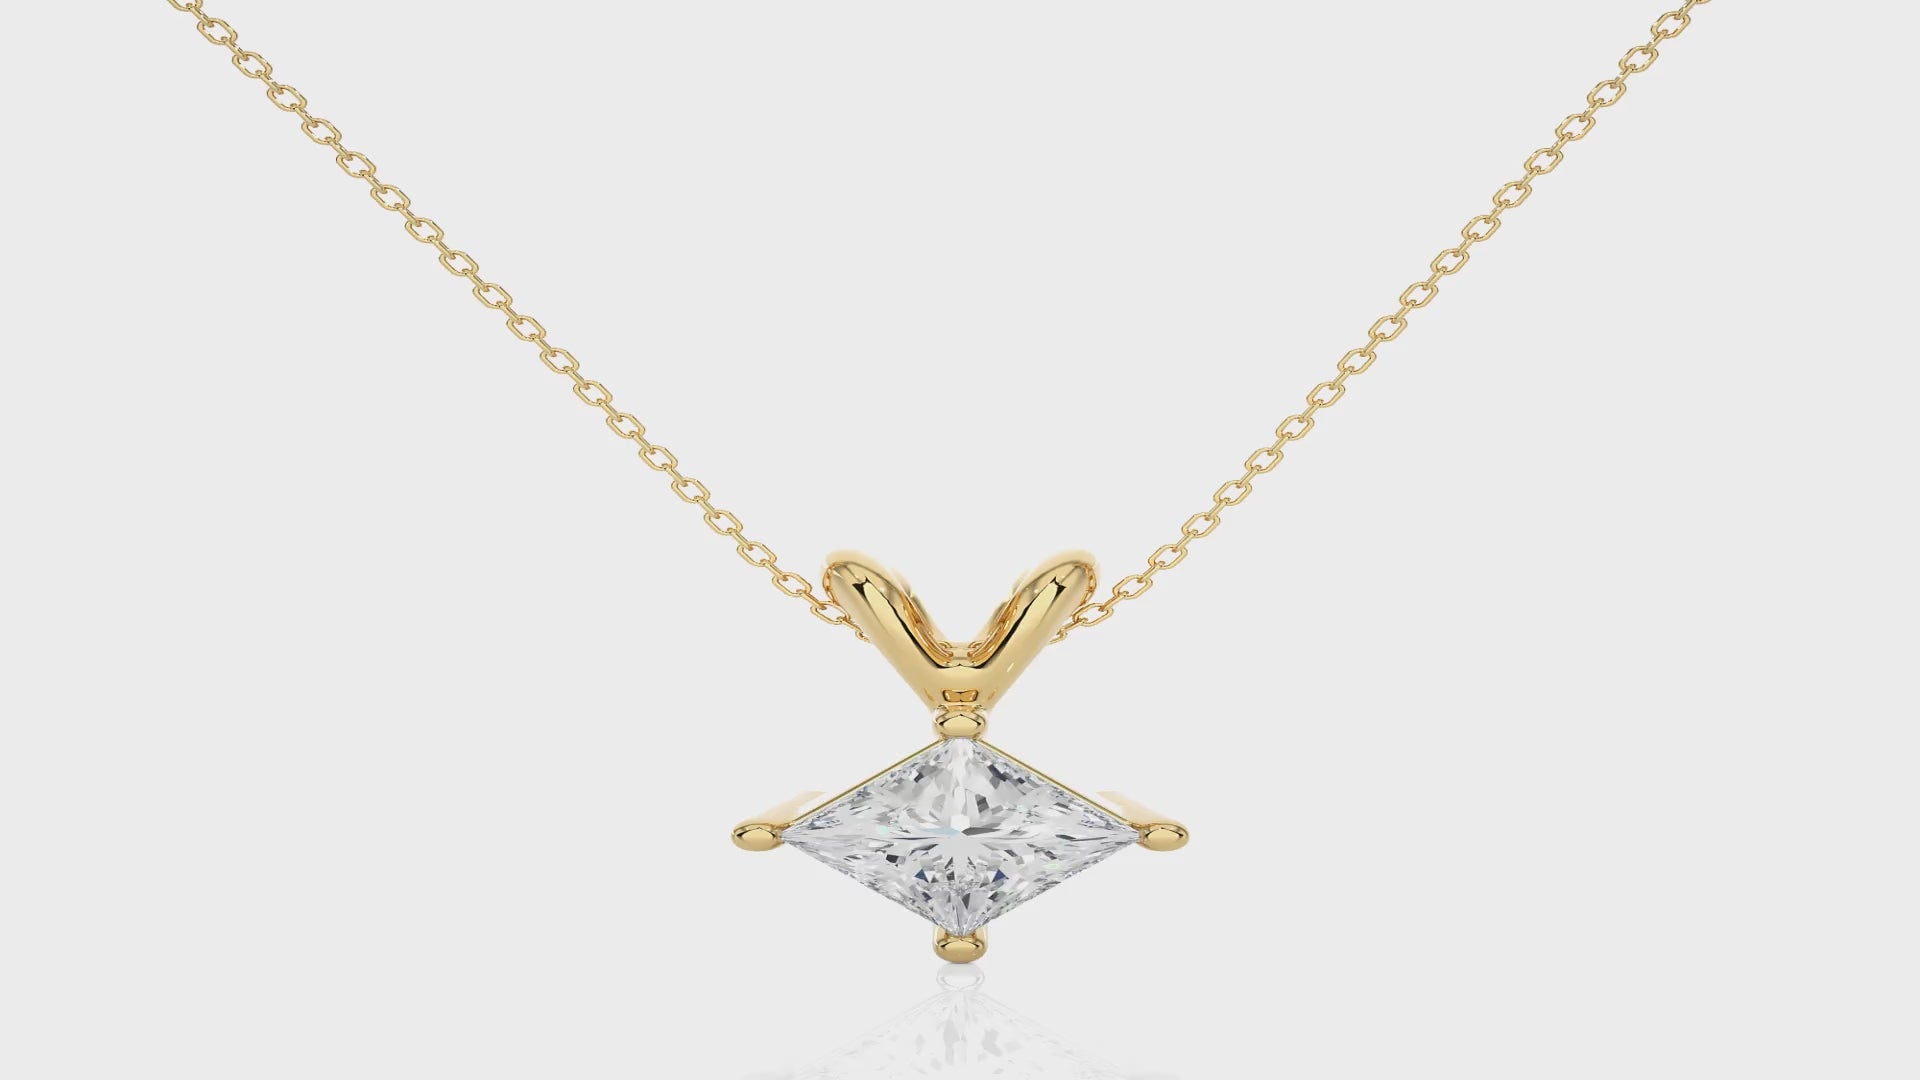 IGI Lab Grown VS1/G Princess cut Diamond Pendant 14K | 18K Gold Women Necklace